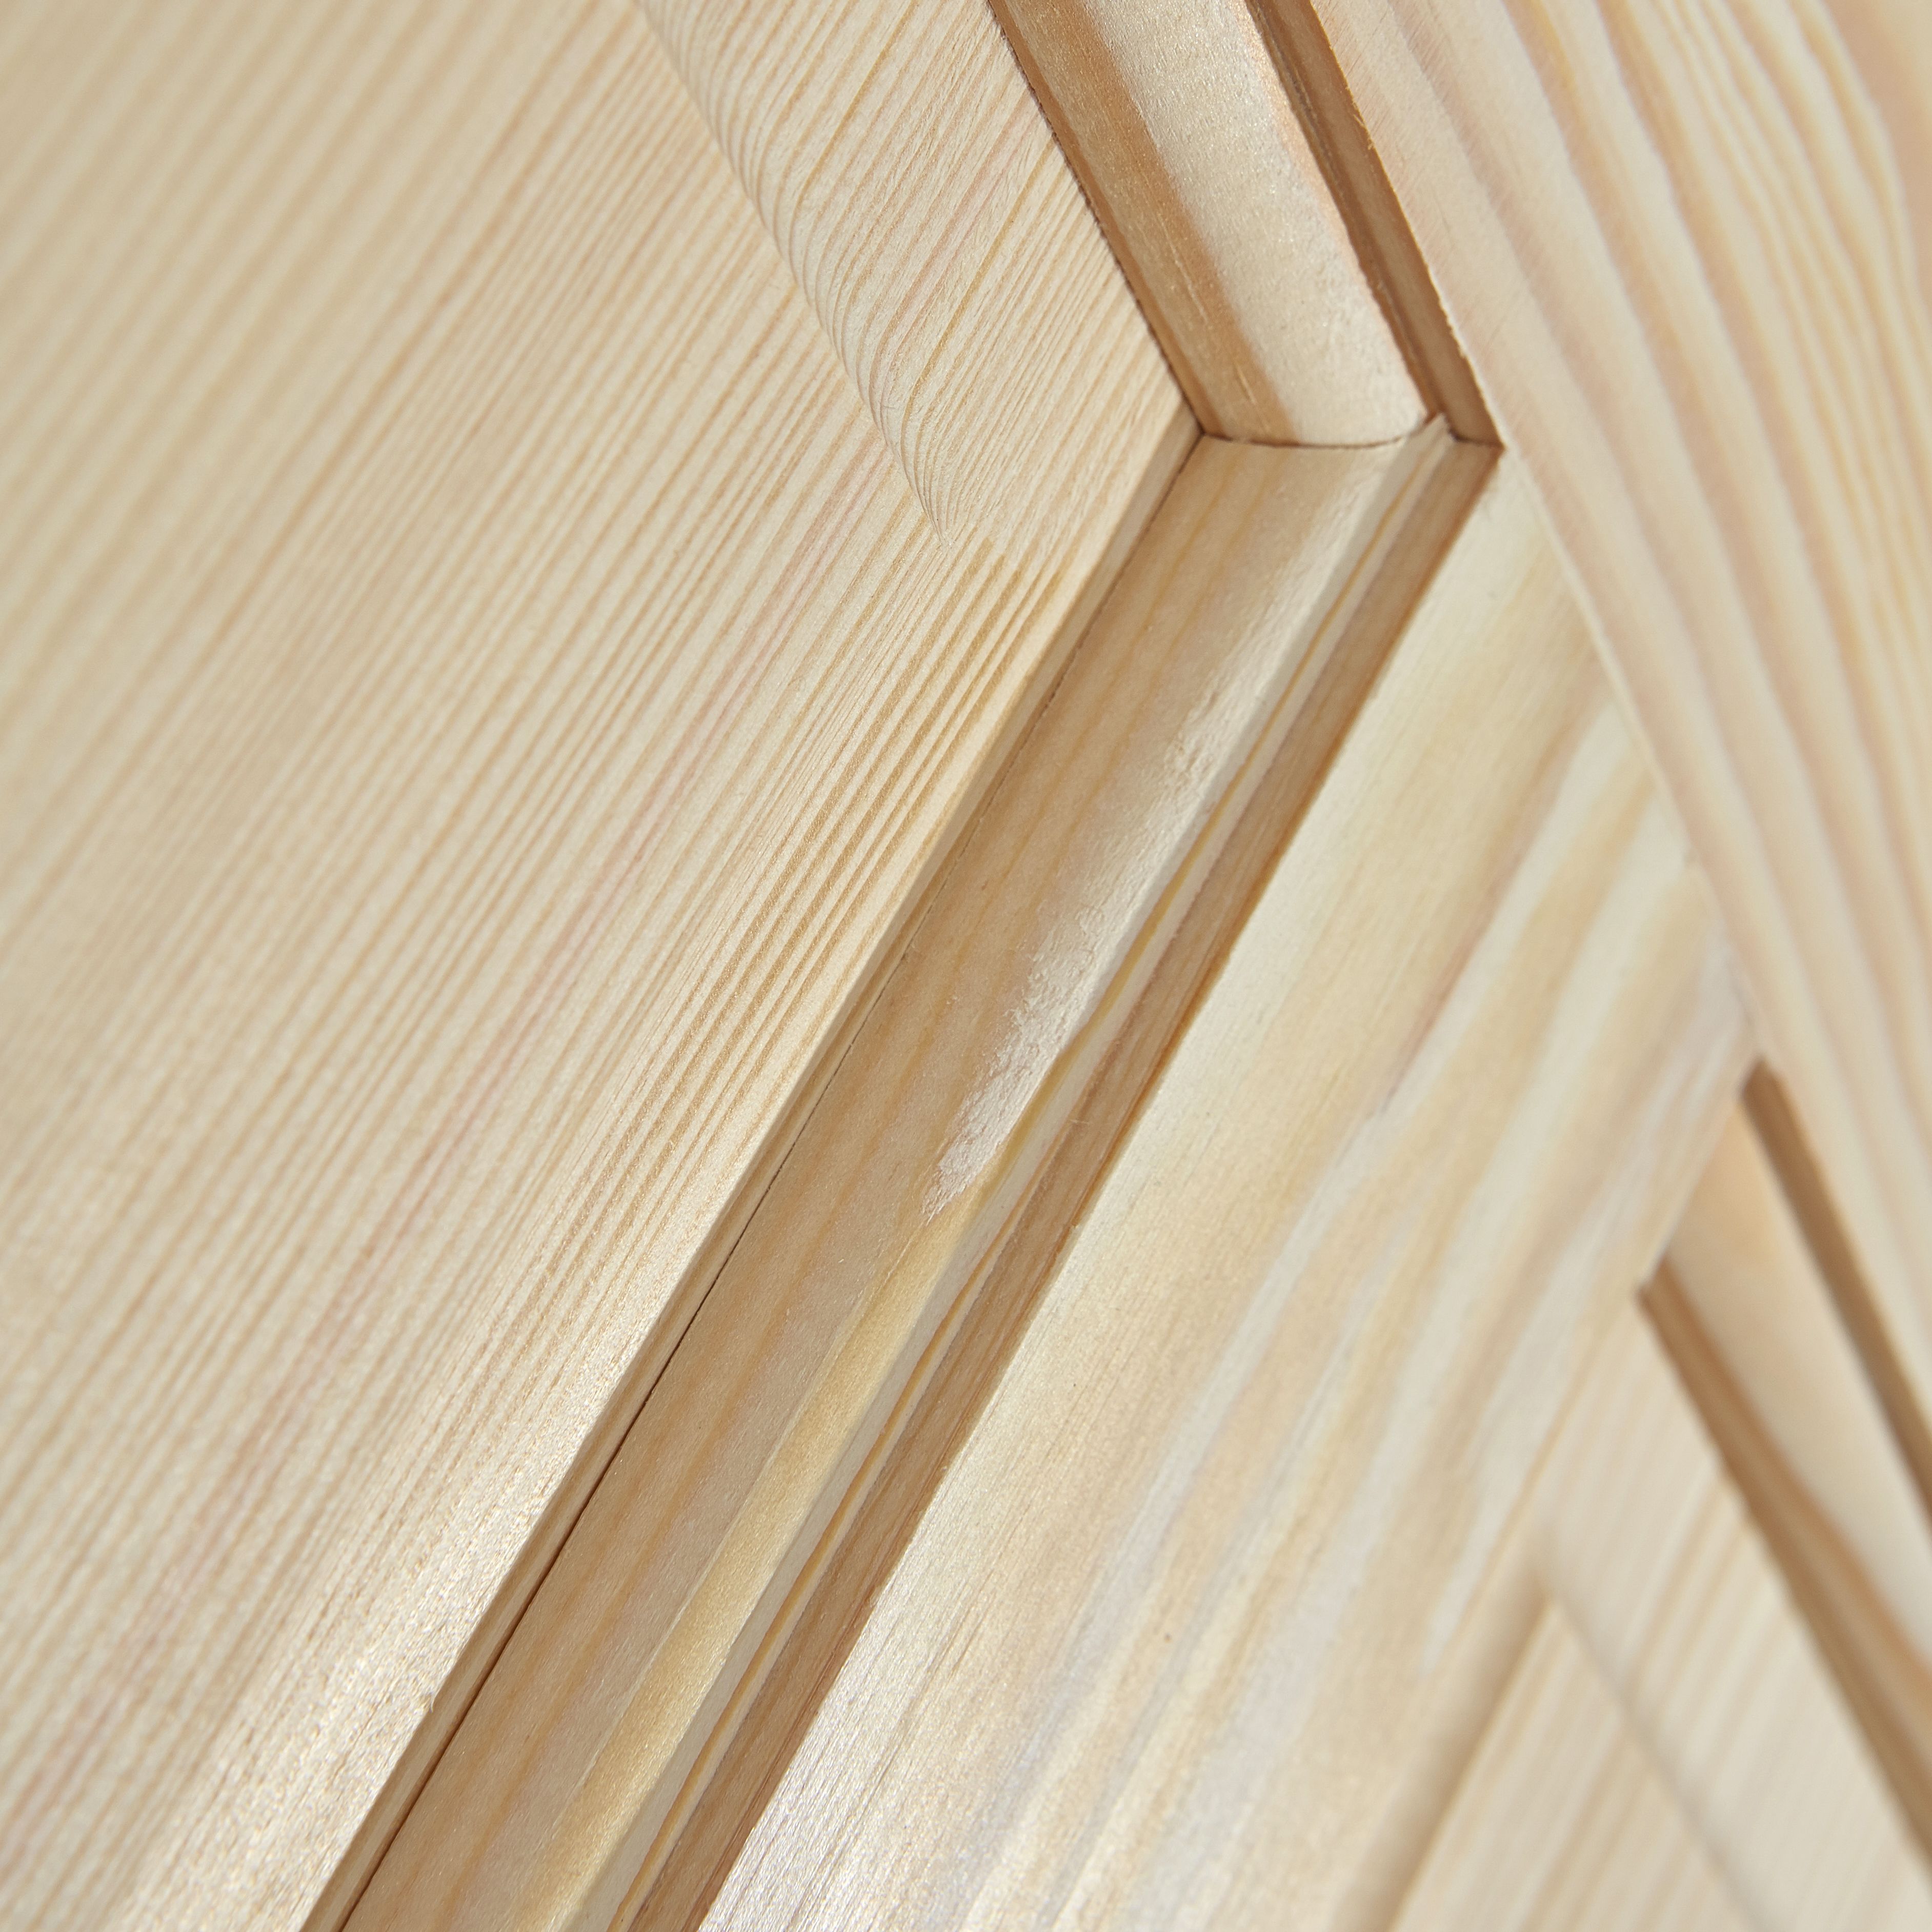 Geom 4 panel Unglazed Internal Clear pine Door, (H)2040mm (W)826mm (T)40mm